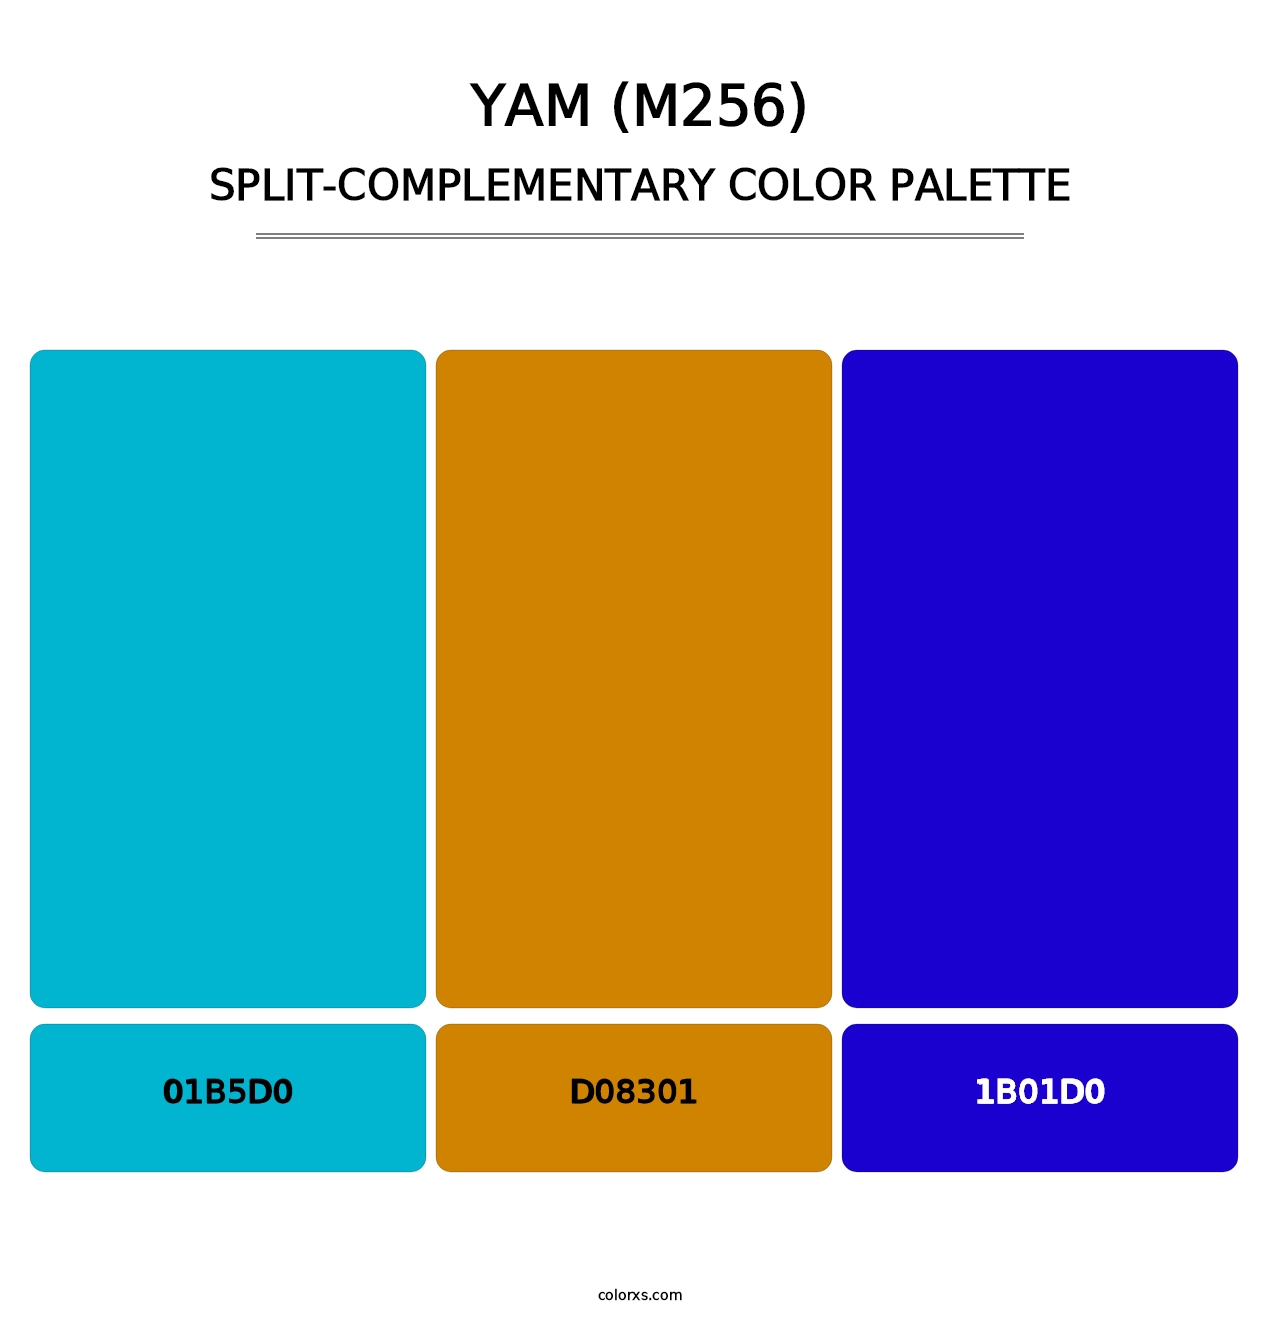 Yam (M256) - Split-Complementary Color Palette